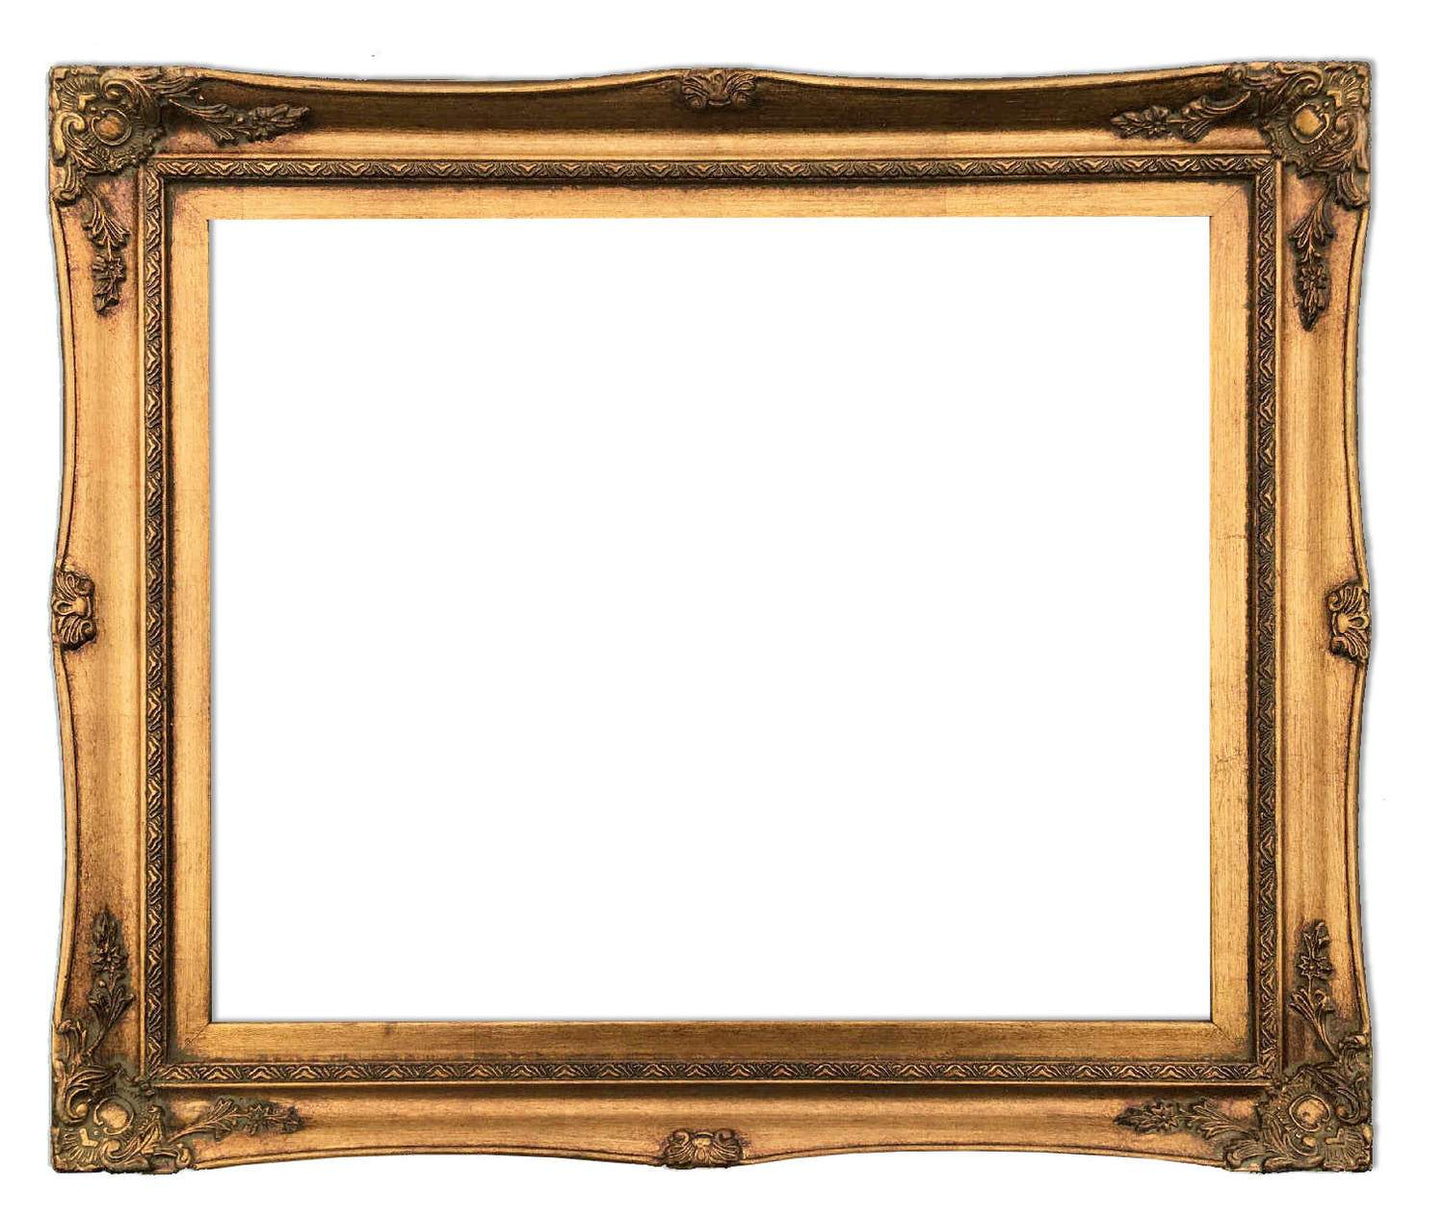 16x20 ins or 40x50 cm, wooden frame in golden color